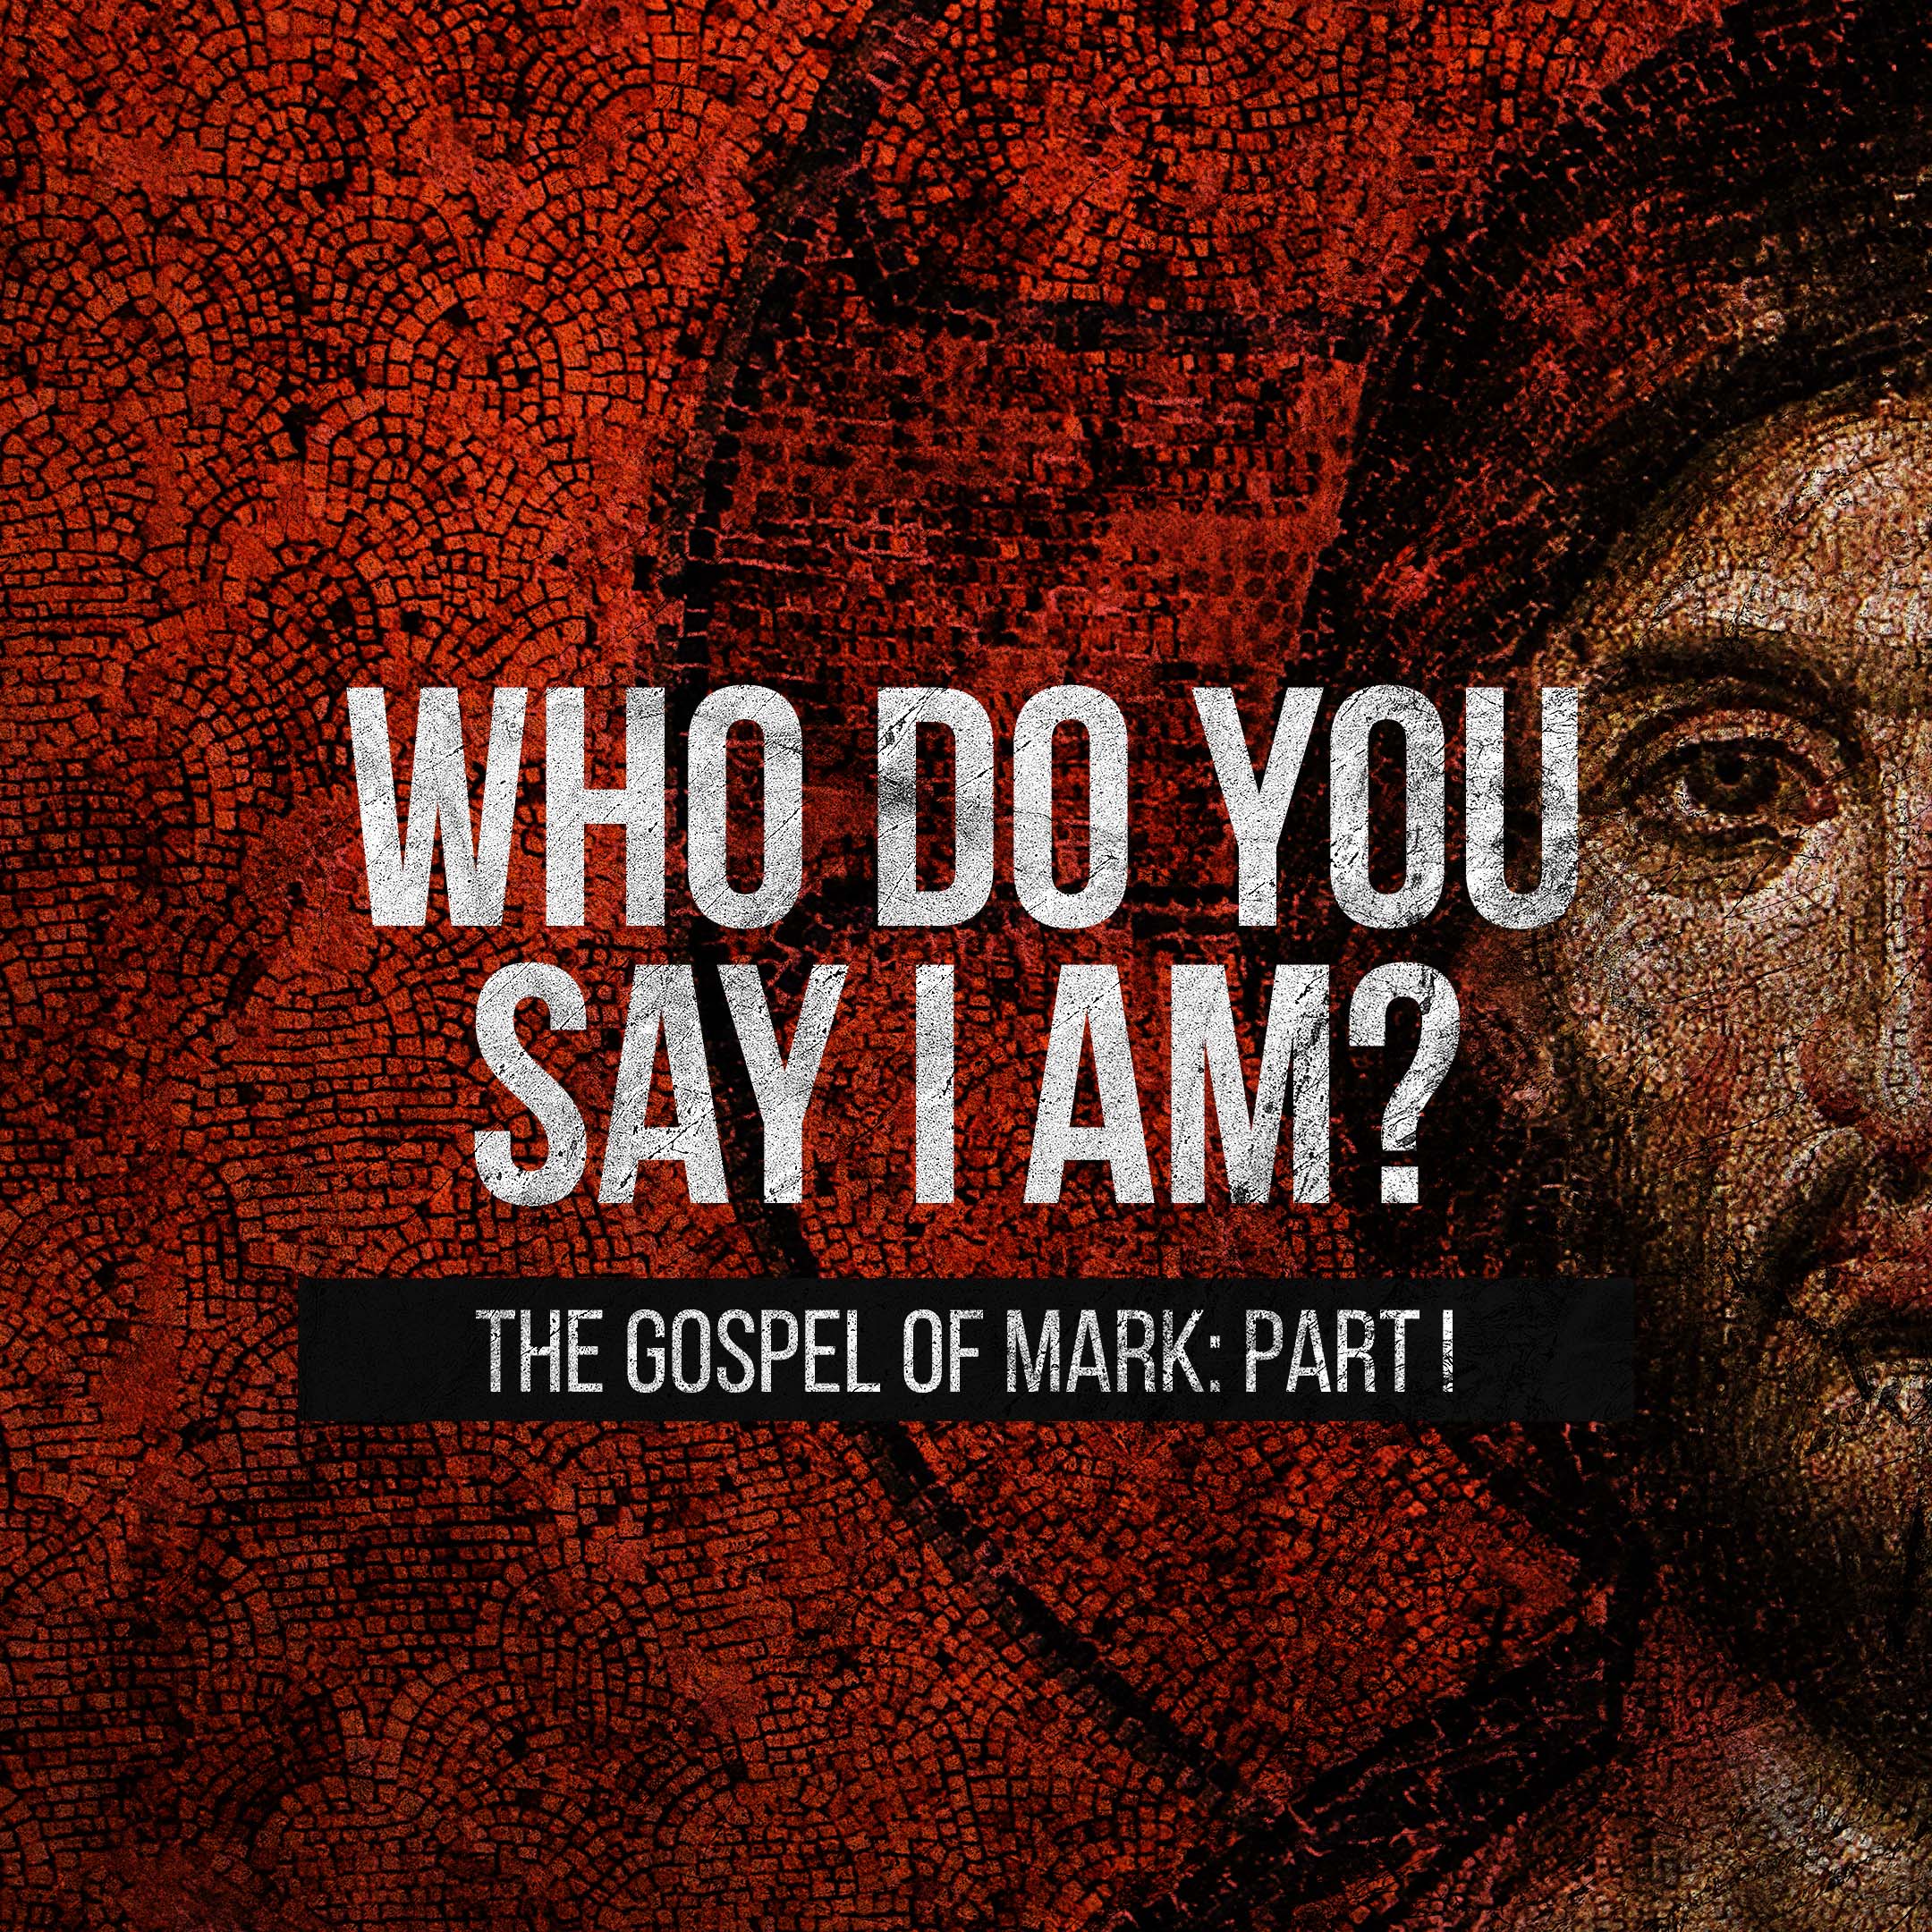 The Book of Mark - Jesus, Friend of Sinners - Mark 2:13-17